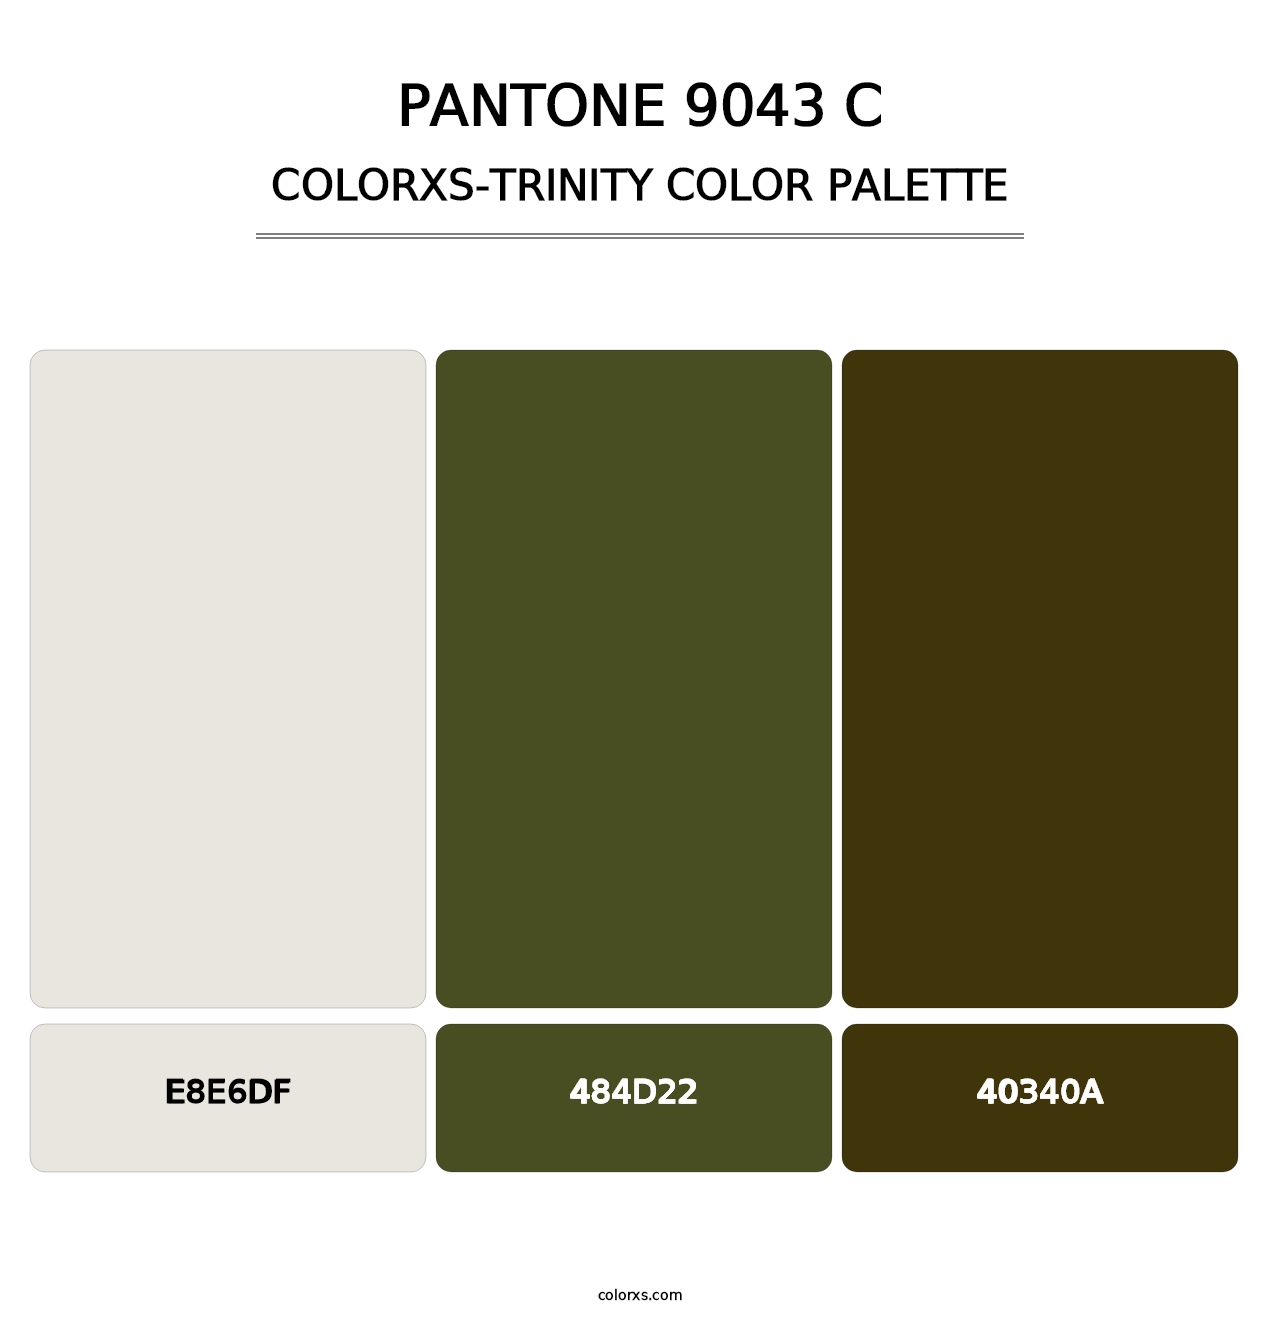 PANTONE 9043 C - Colorxs Trinity Palette